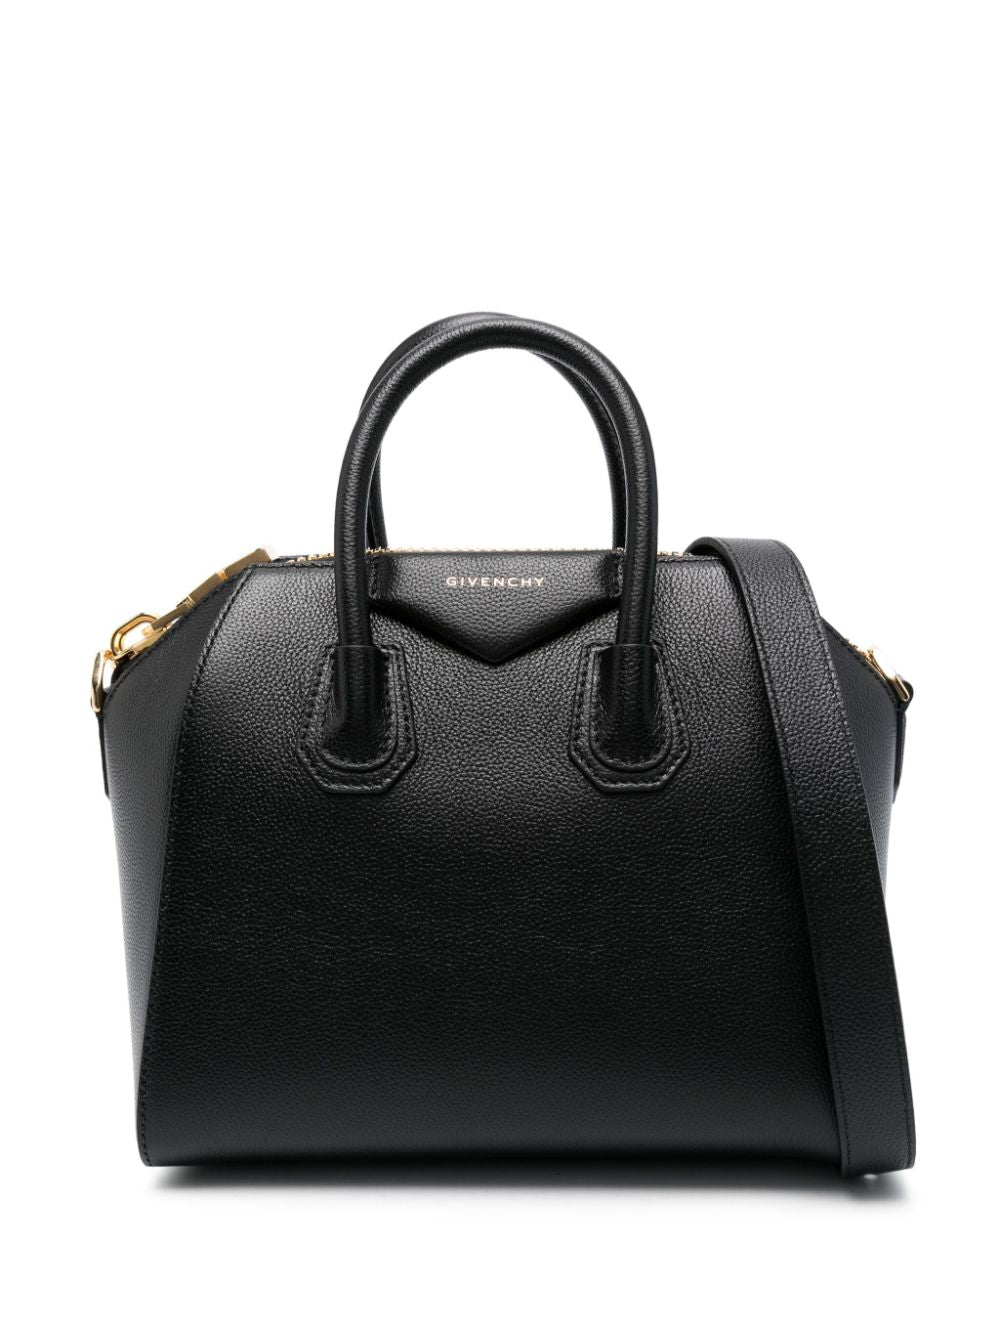 GIVENCHY Antigona Small Pebbled Leather Handbag with Gold-Tone Accents and Detachable Strap